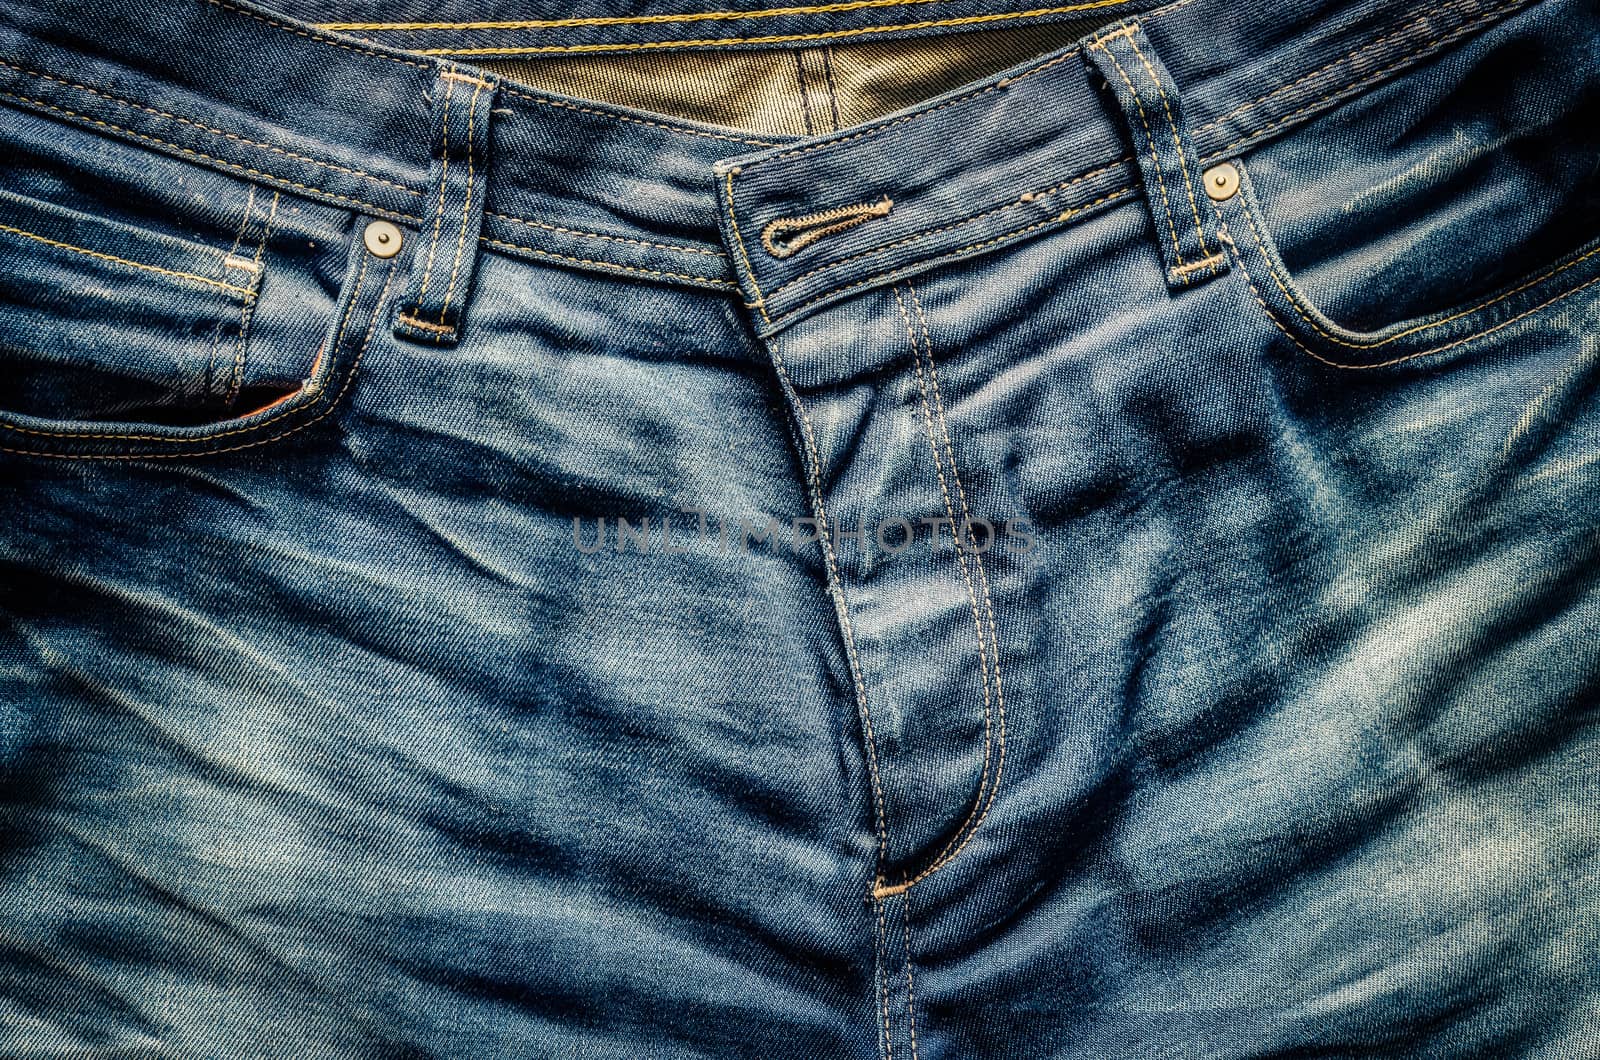 Detail of nice blue jeans in old looking vintage style